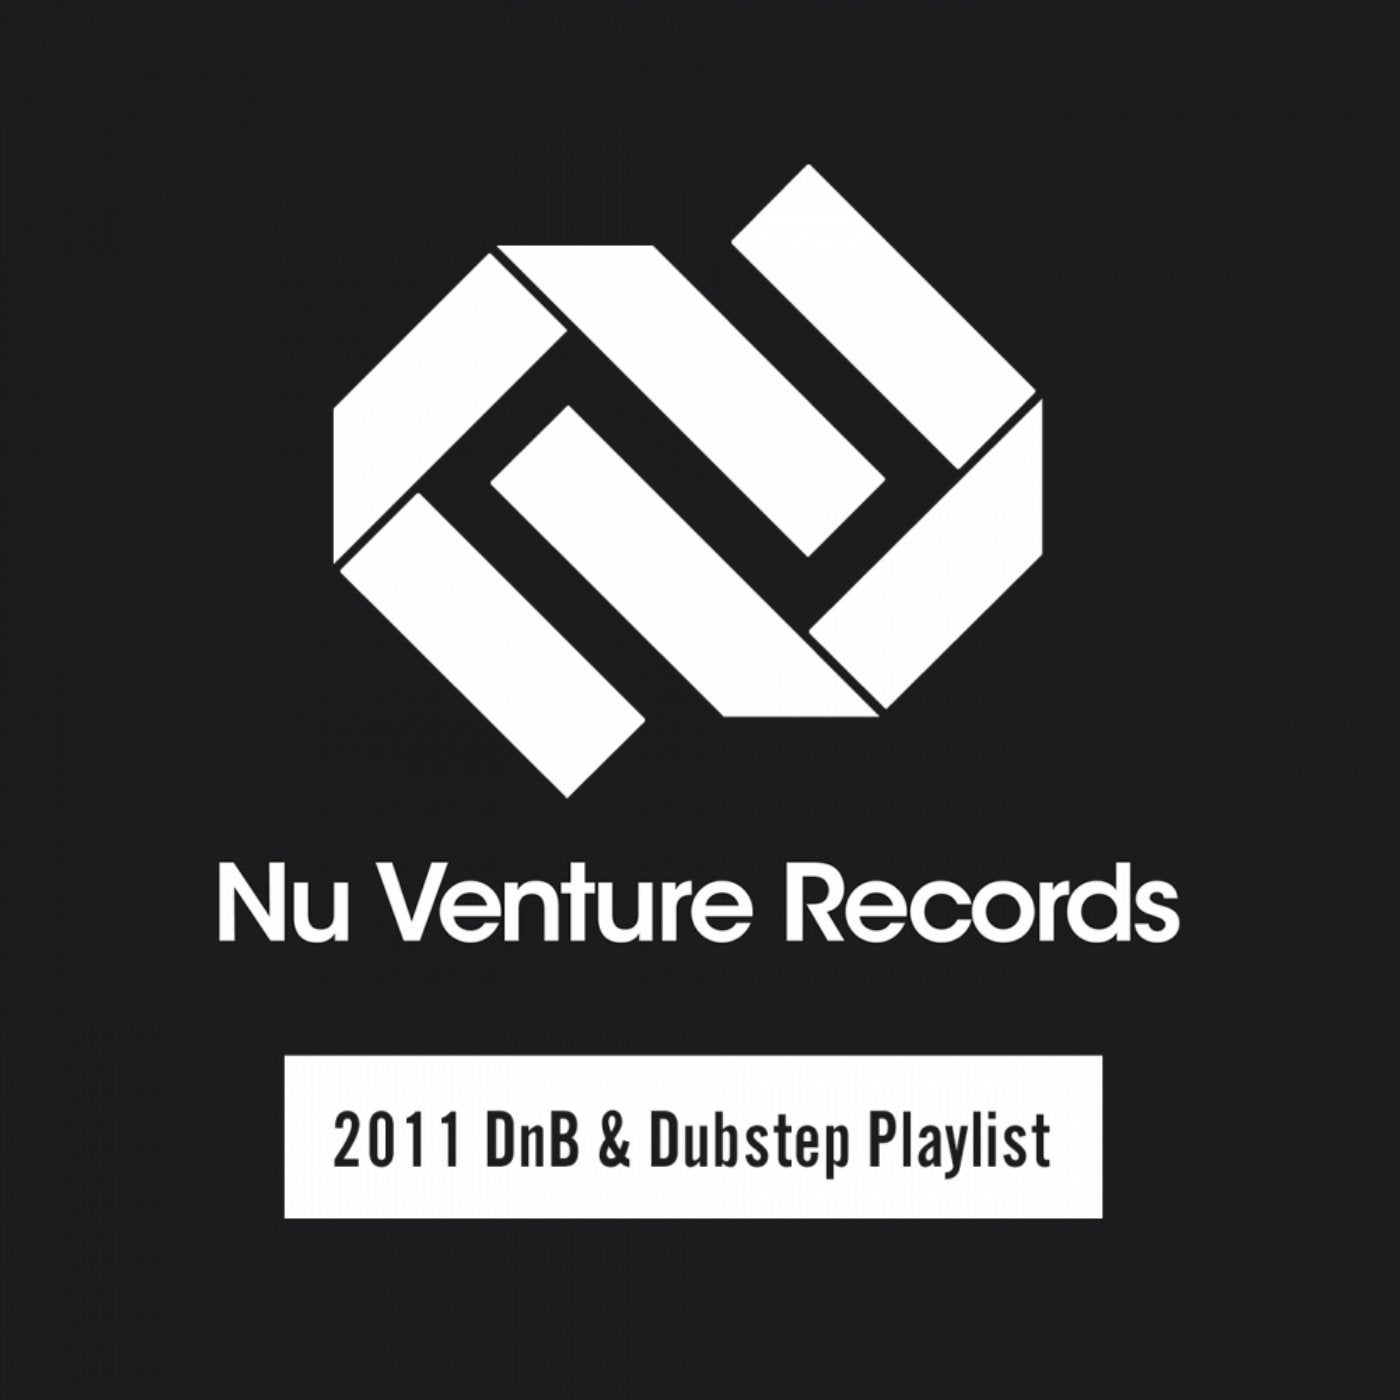 Nu Venture Records: 2011 DnB & Dubstep Playlist